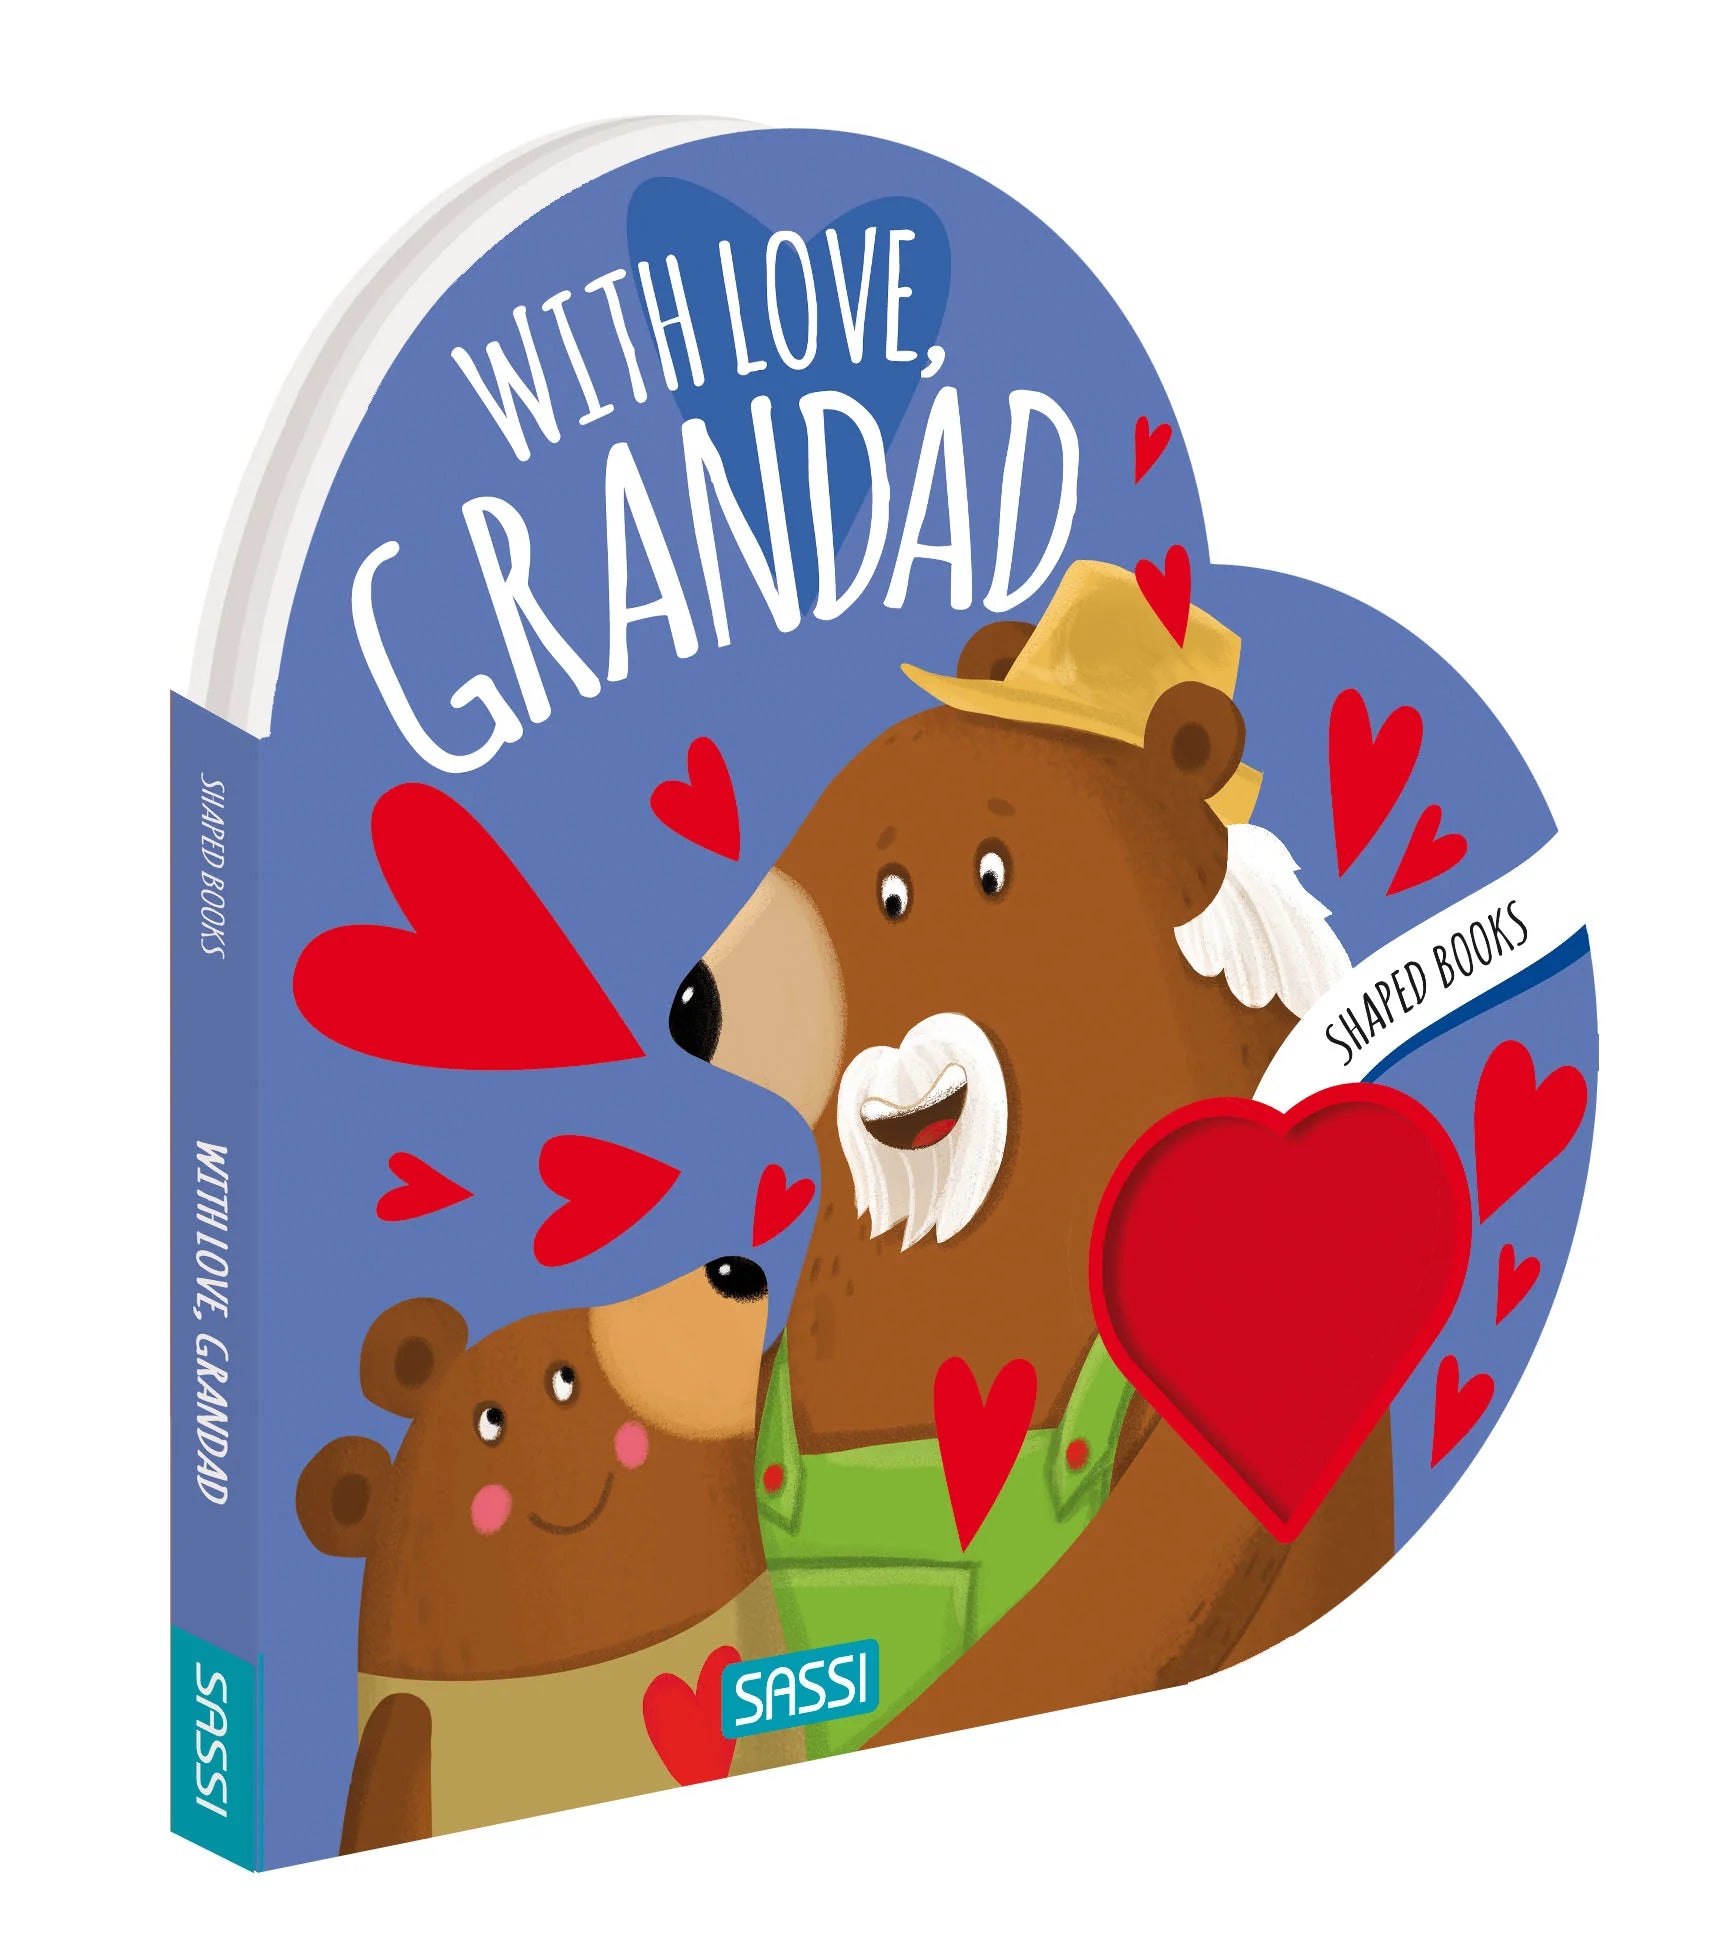 Sassi | Shaped Board Book - with Love, Grandad